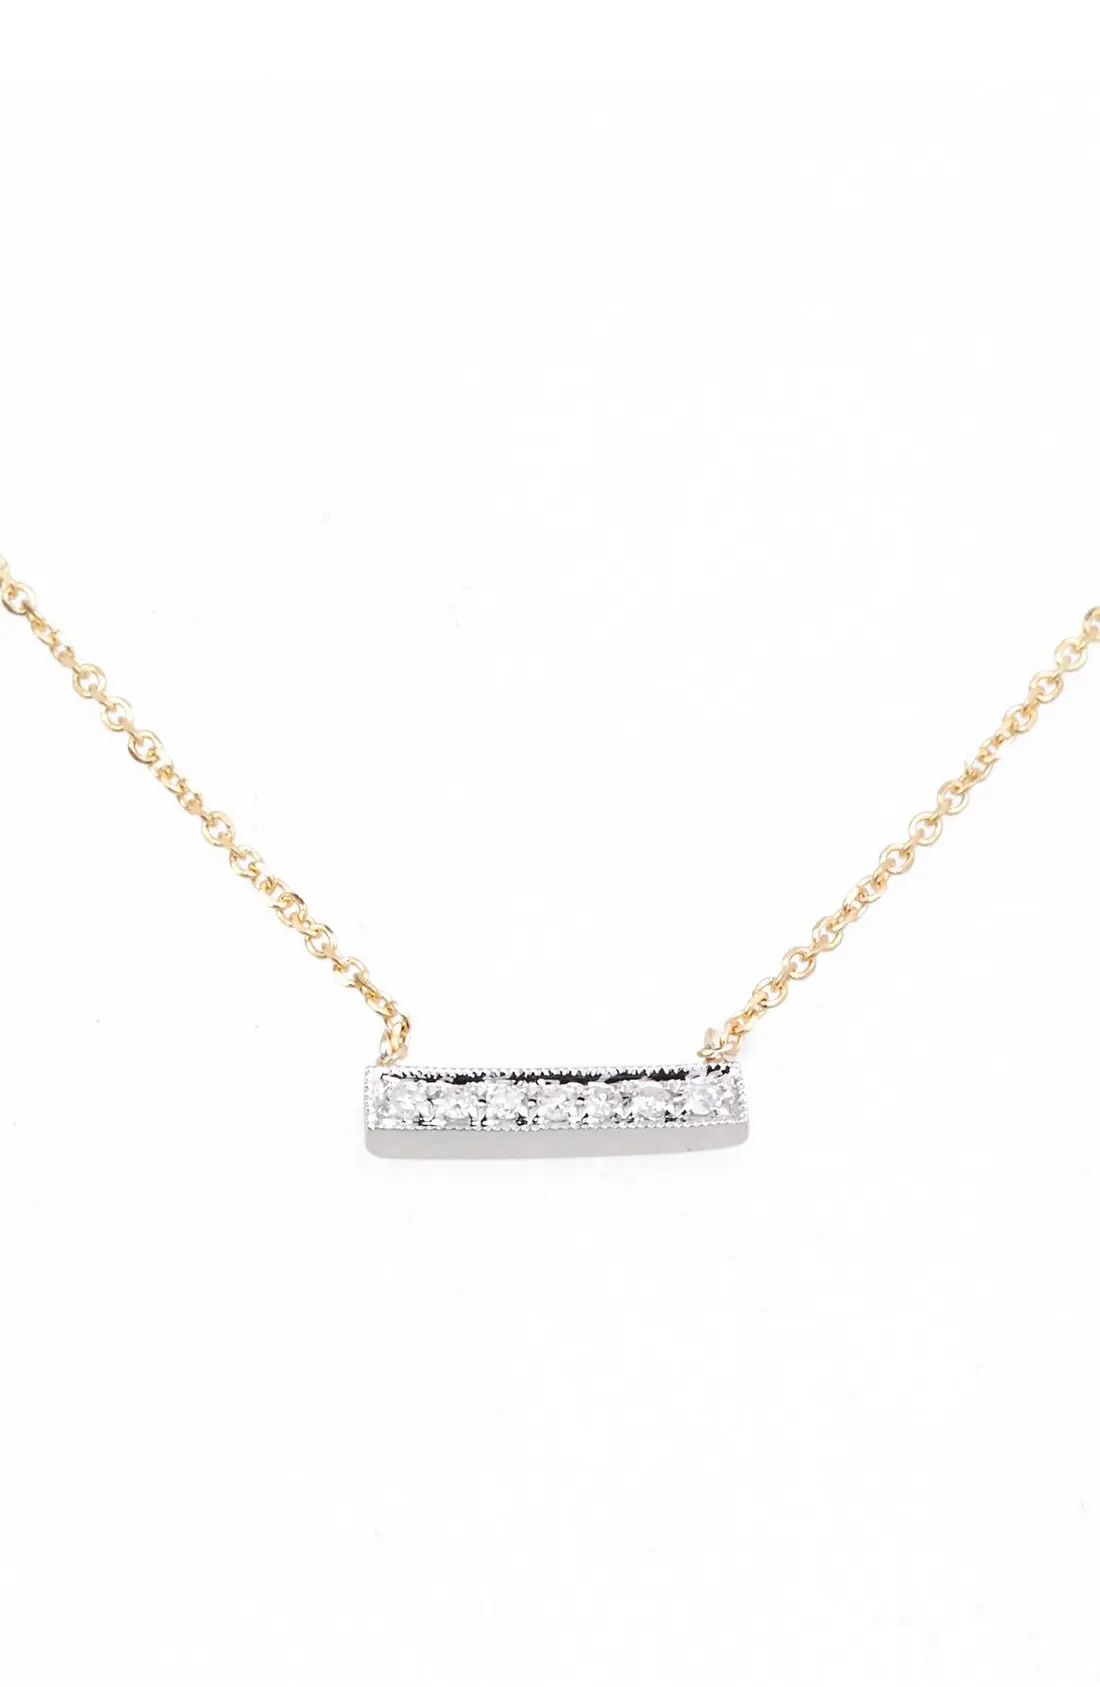 Dana Rebecca Designs 'Sylvie Rose' Diamond Bar Pendant Necklace | Nordstrom